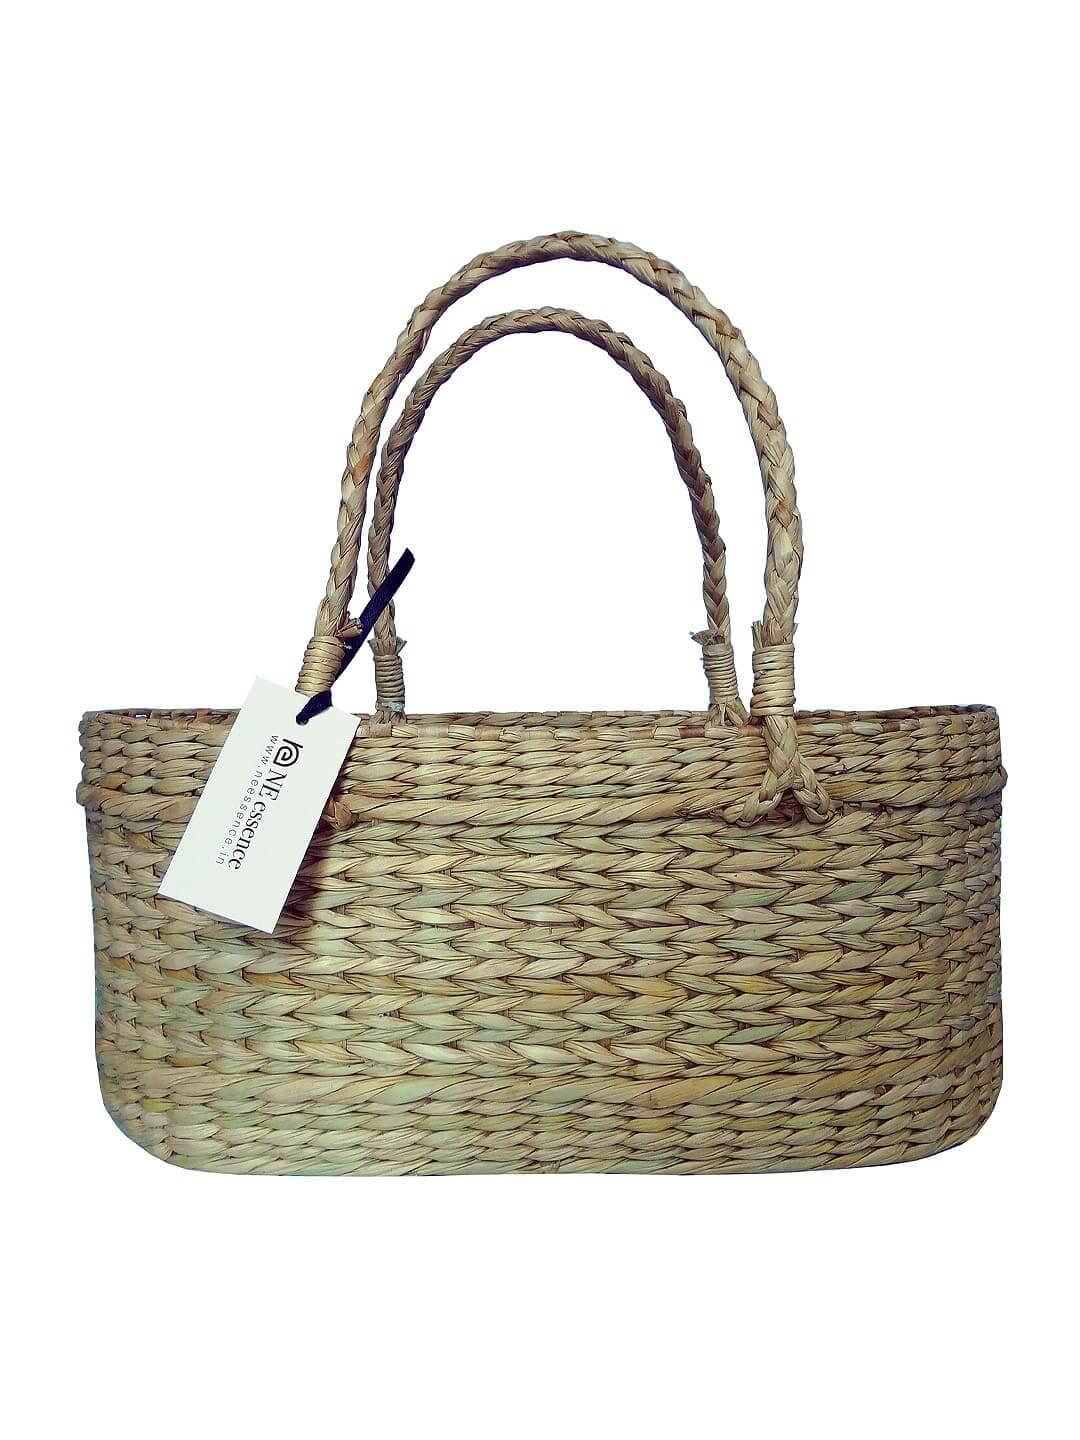 North east essence kauna grass/seagrass handbag